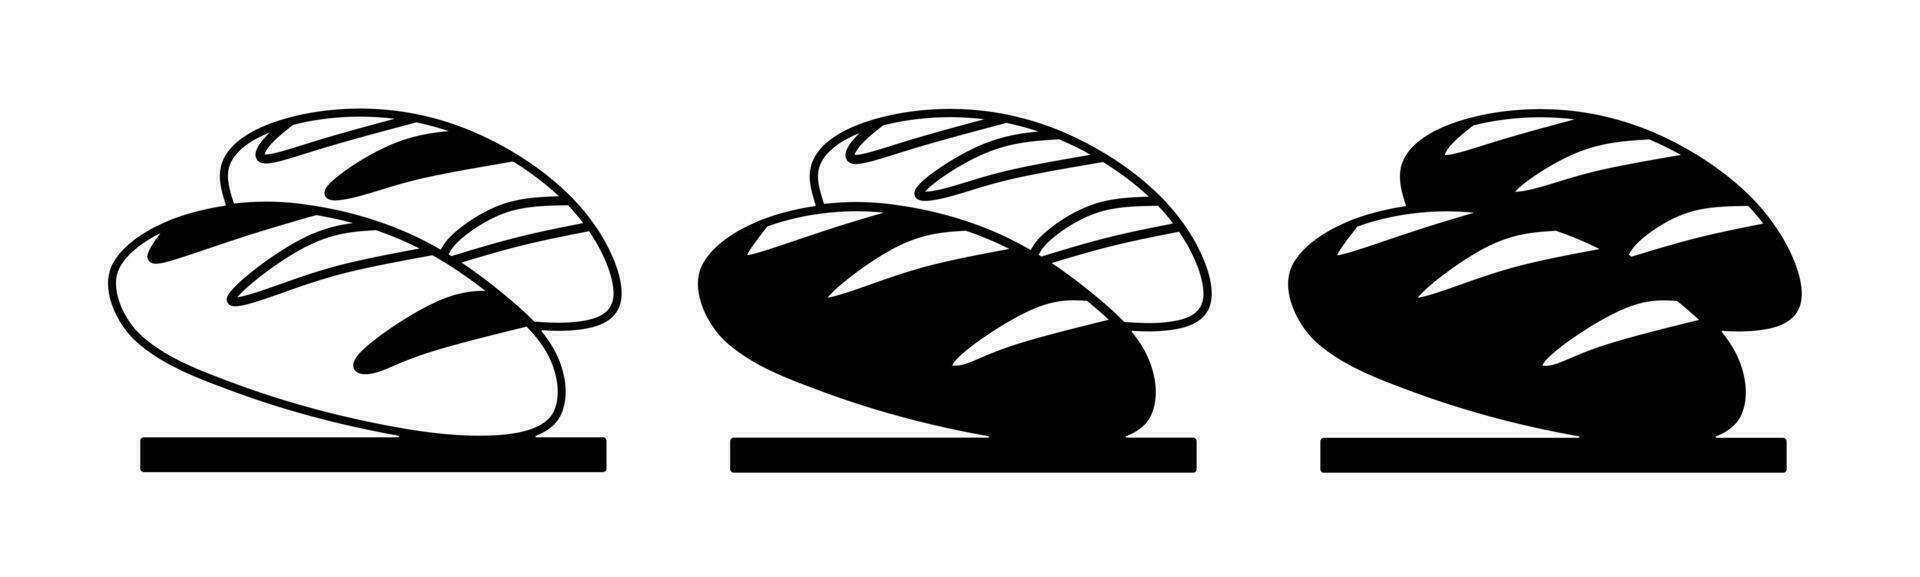 Bread illustration. Bread icon vector set. Design for business. Stock vector.